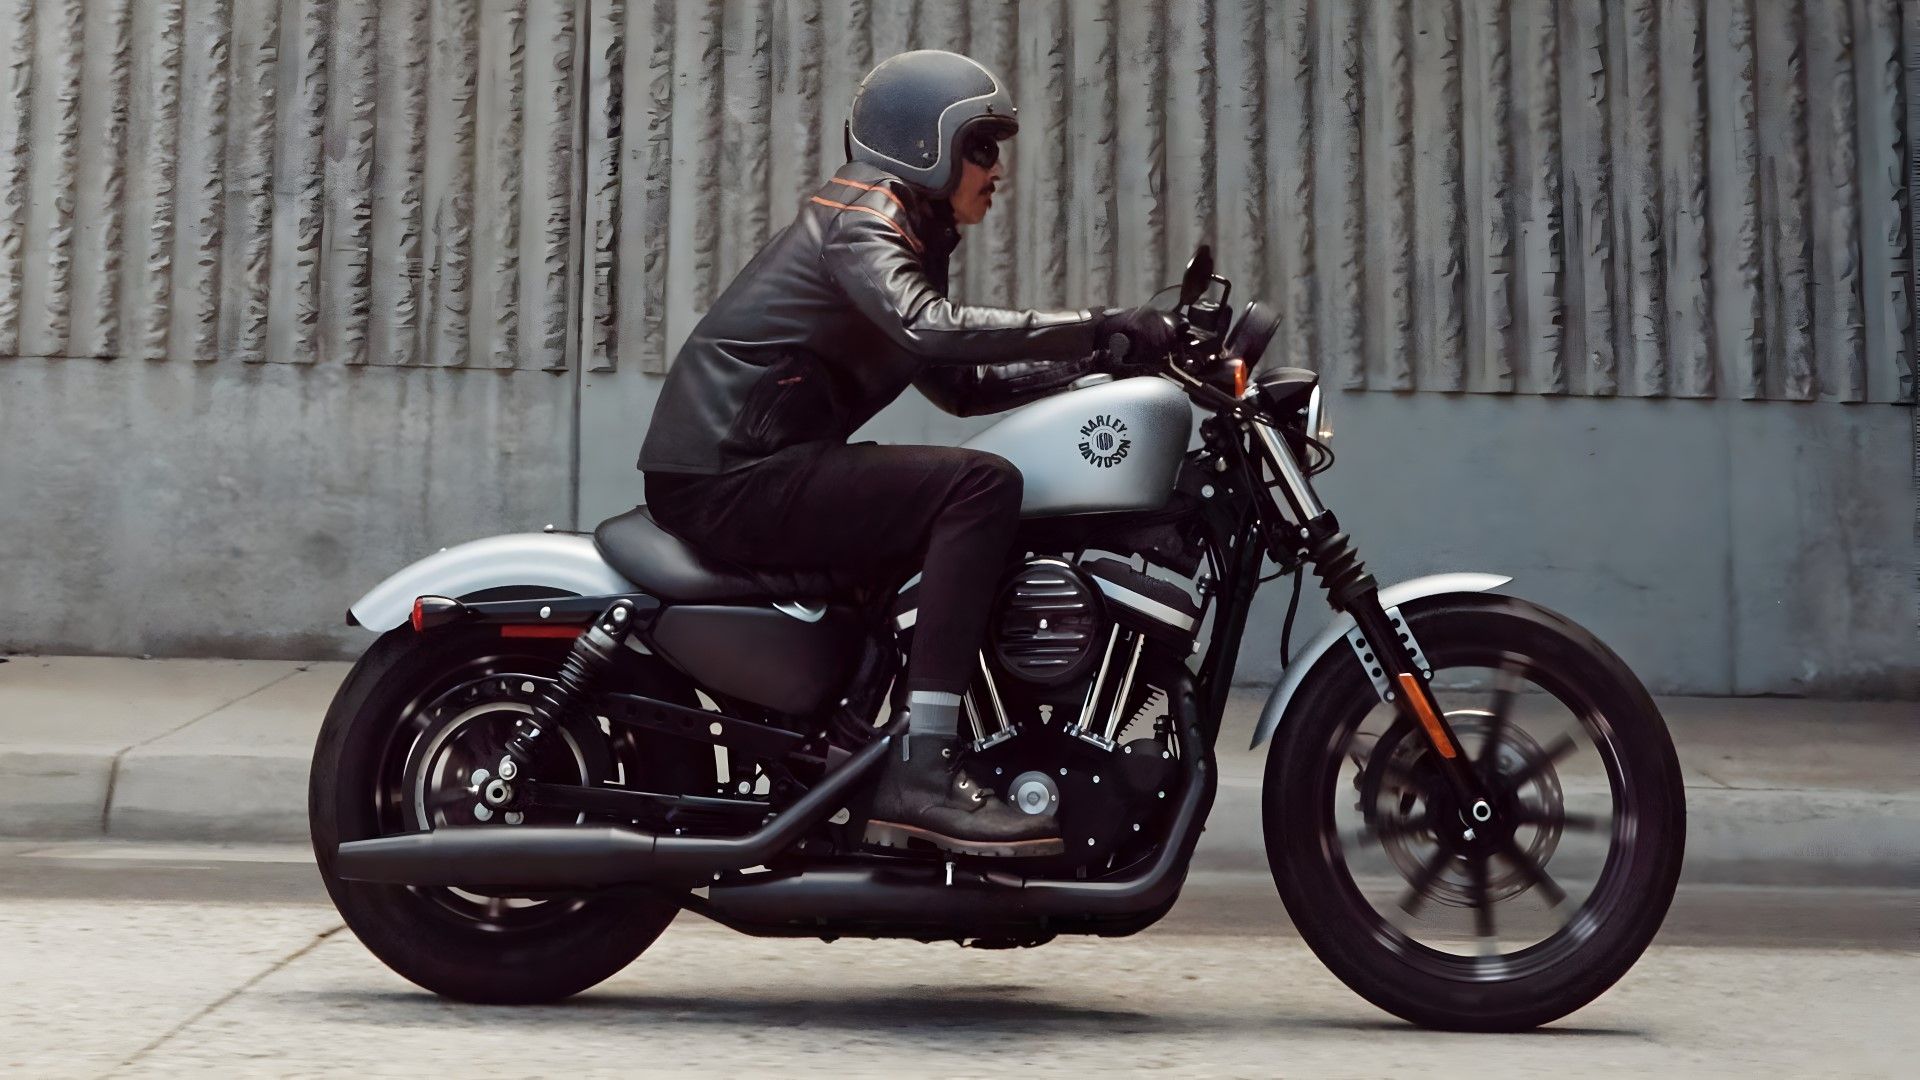 Harley-Davidson XL883N Sportster Iron accelerating side profile vieew